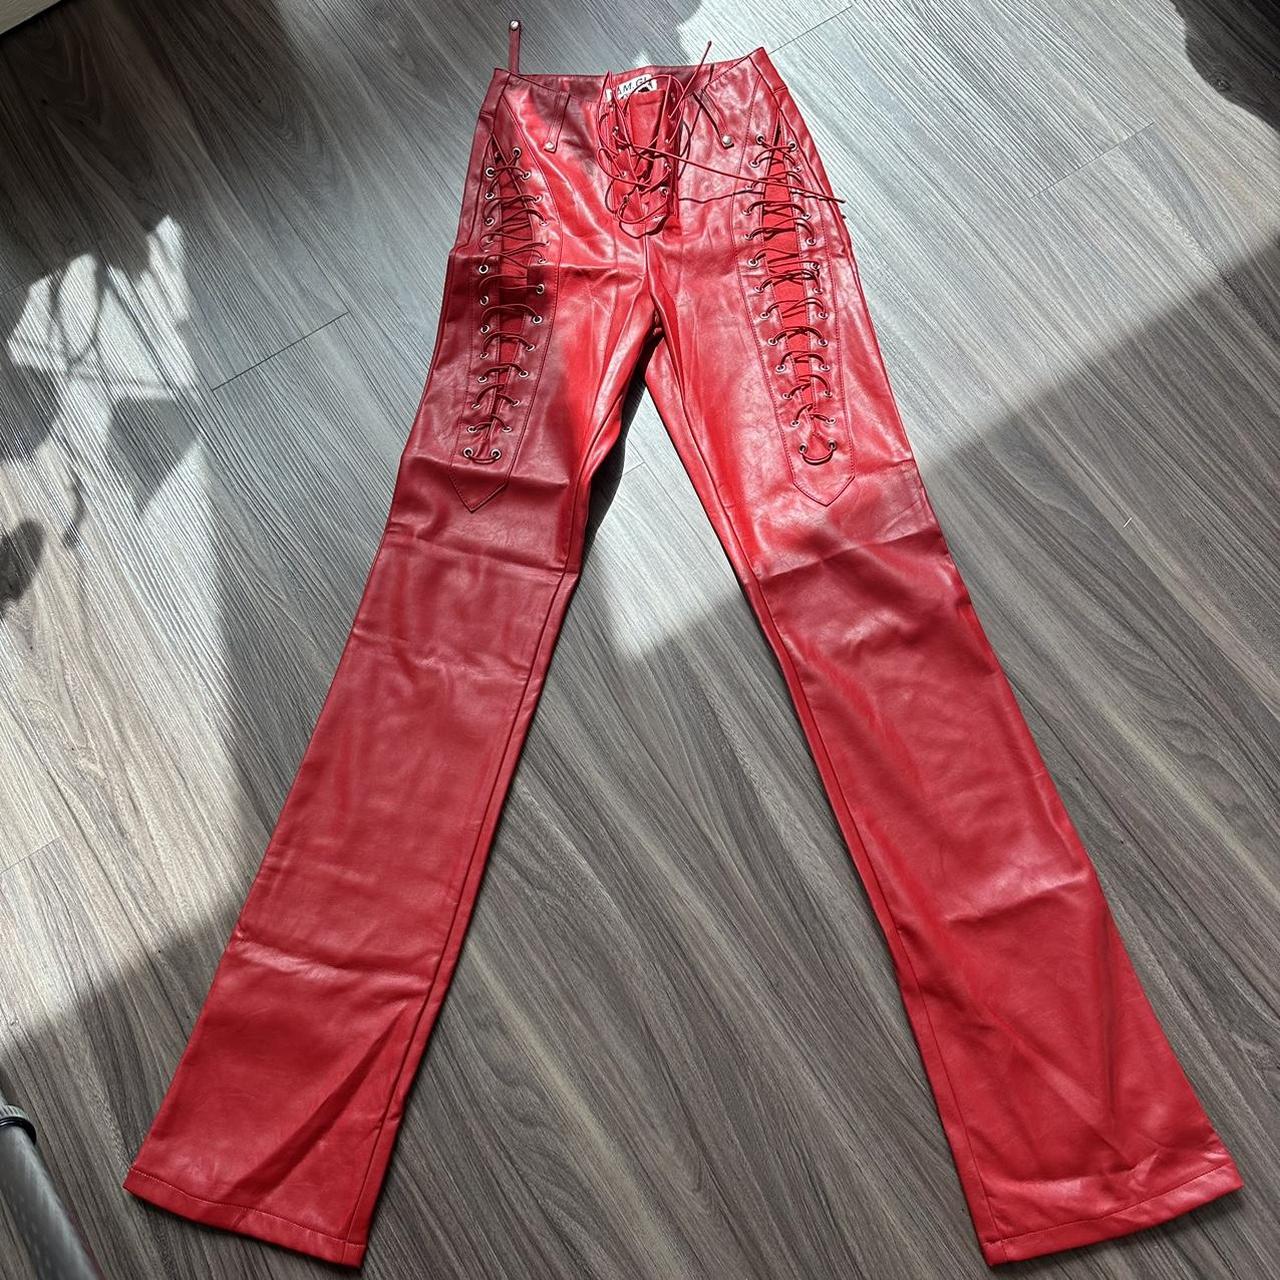 Red brand new 90 degree legging Size large - Depop